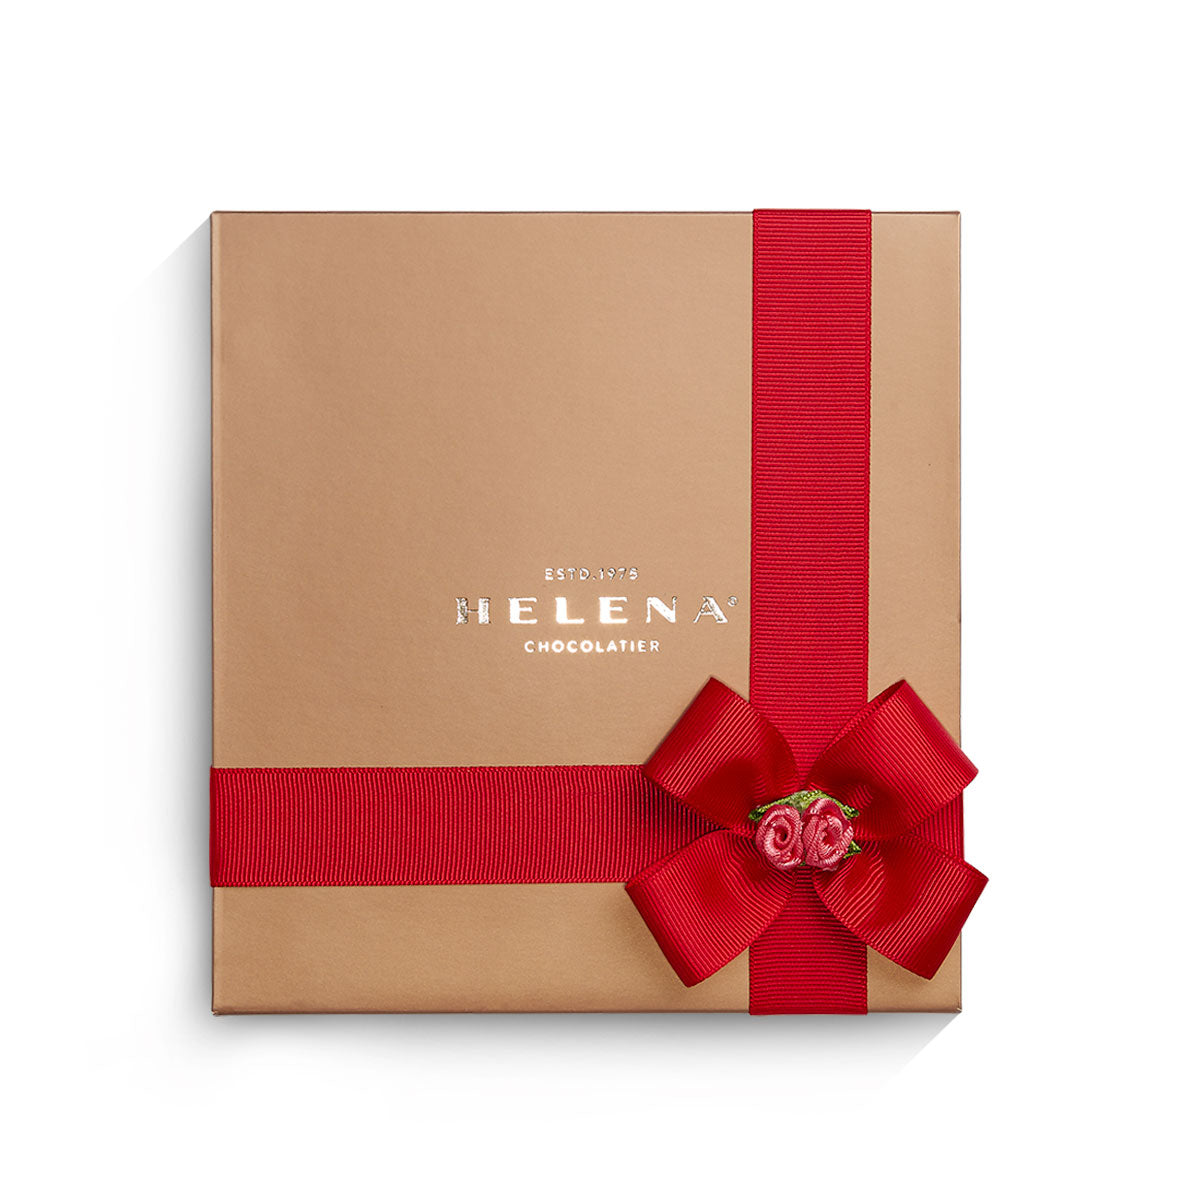 Madame Helena Gold Assorted Chocolate & Fondant Caramel: 10-Pack, 10oz | 45% Cacao, Gluten-Free